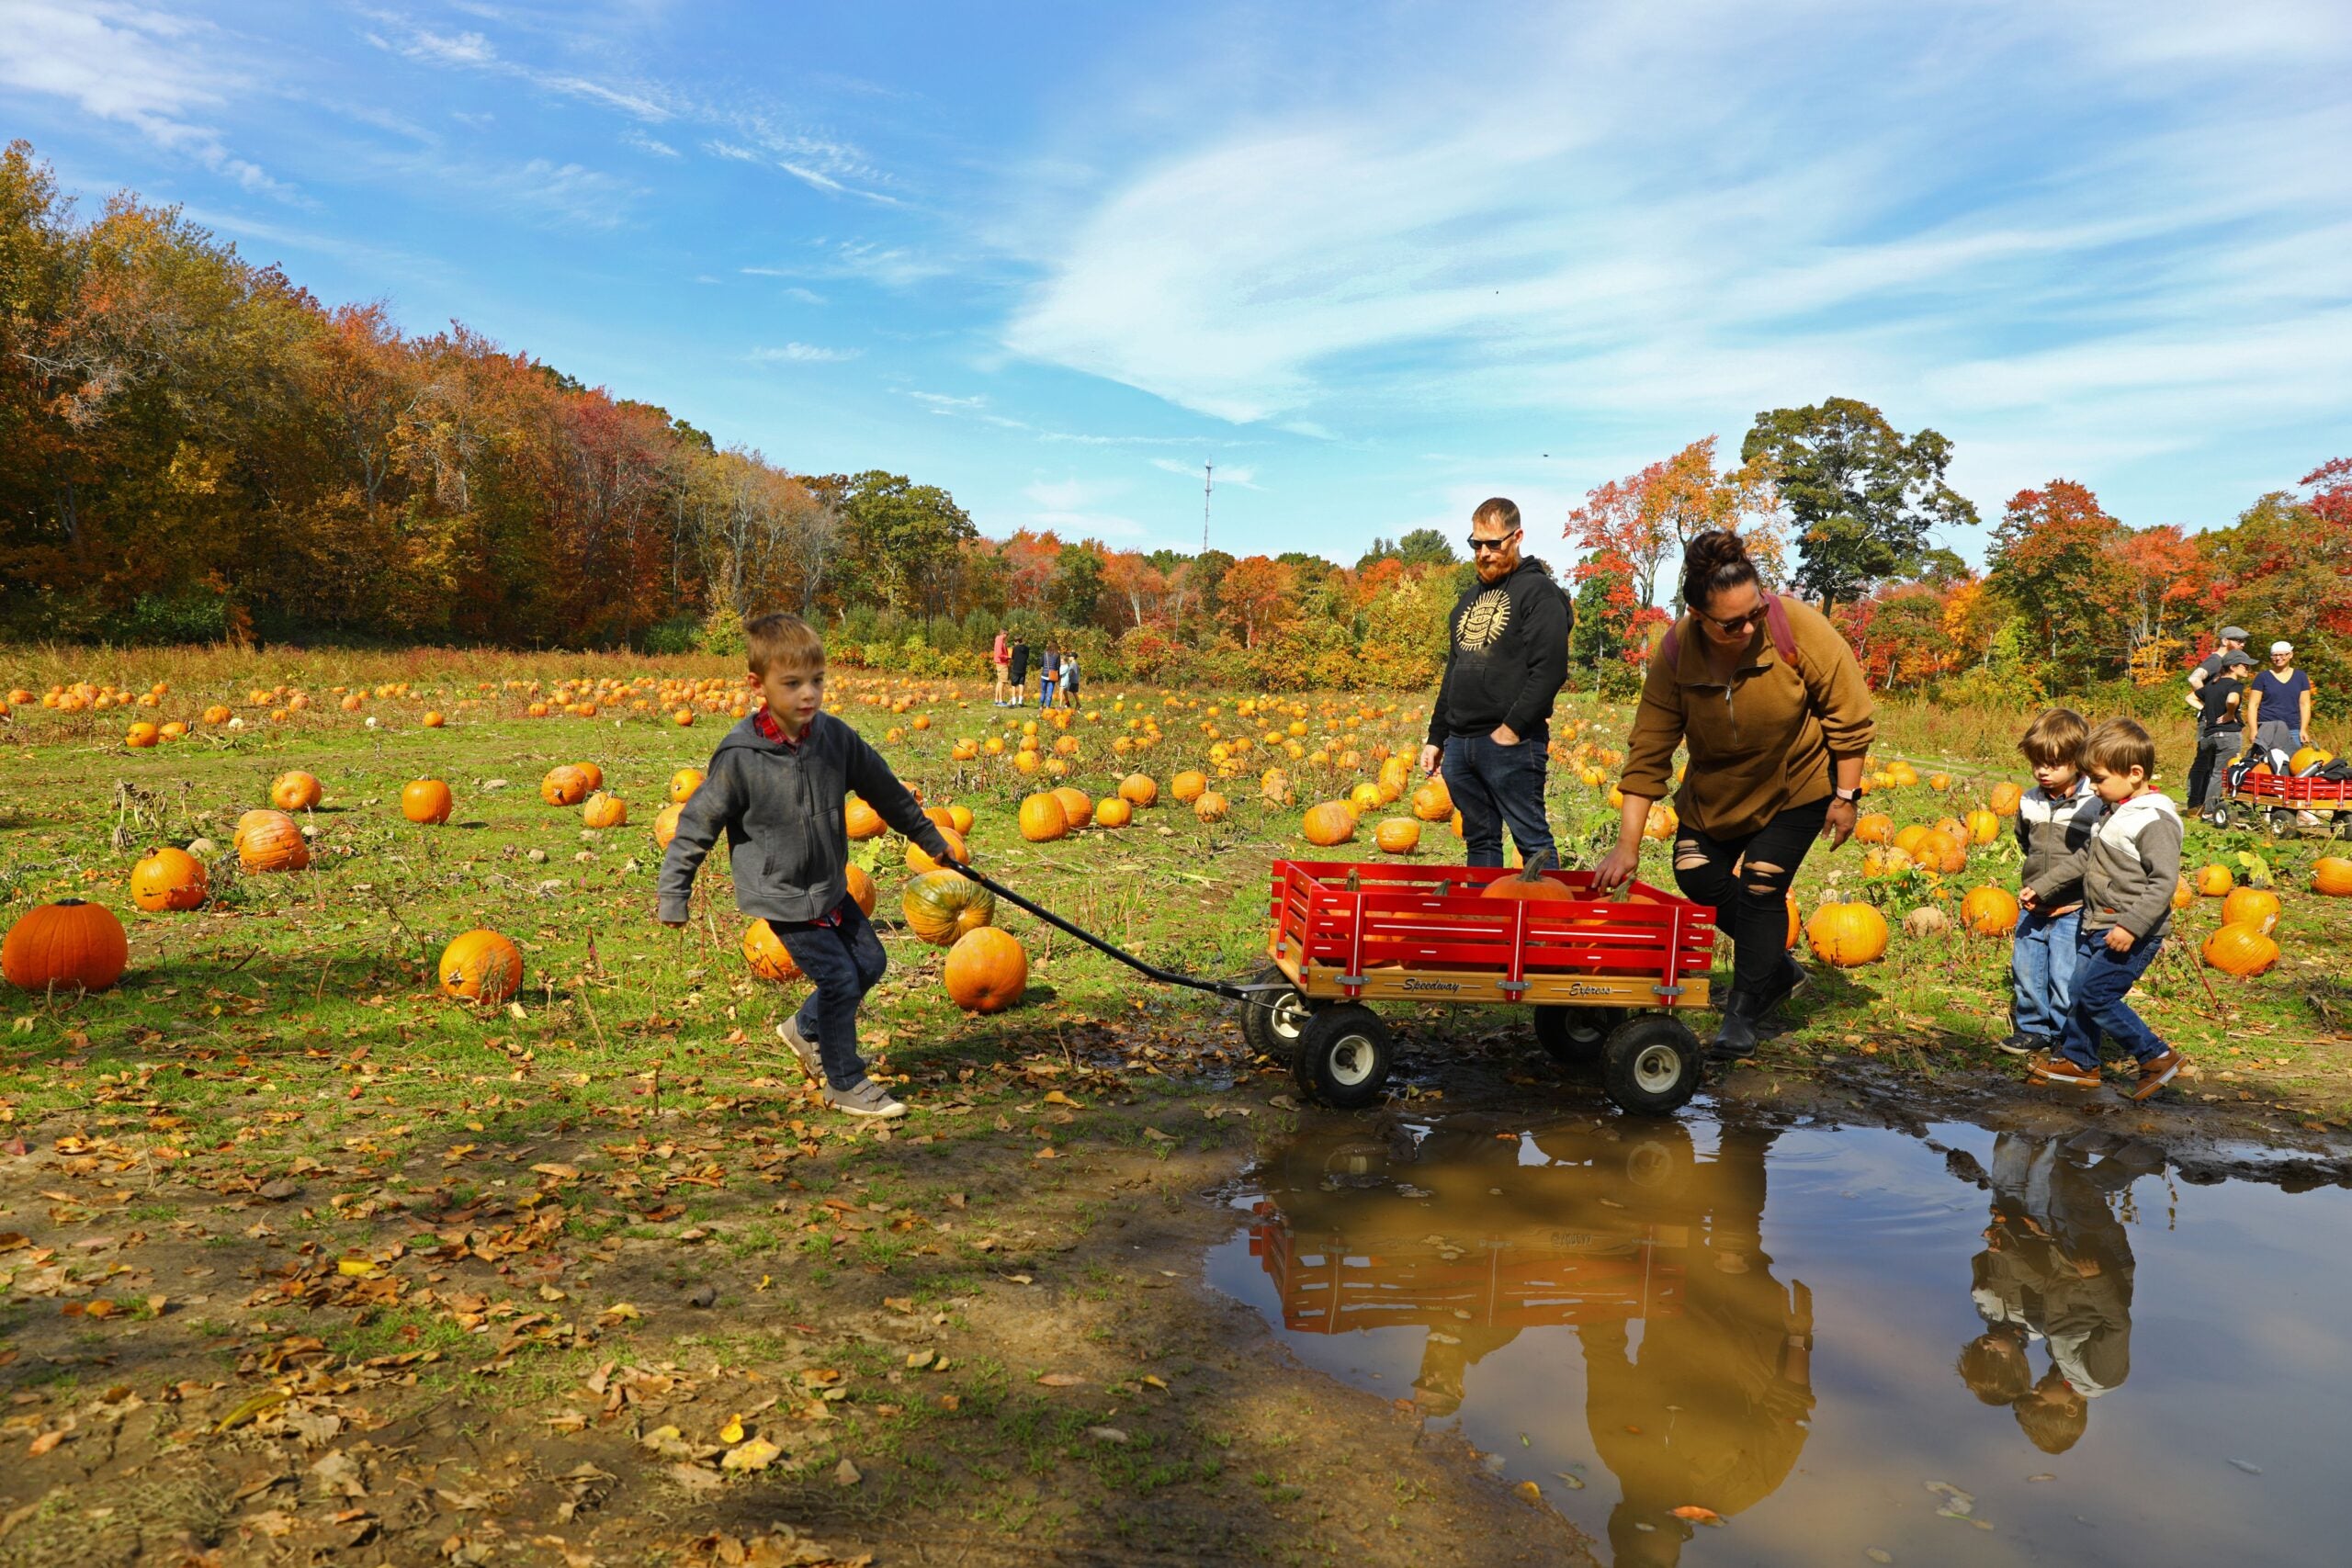 A family walks through a pumpkin patch with a wagon.